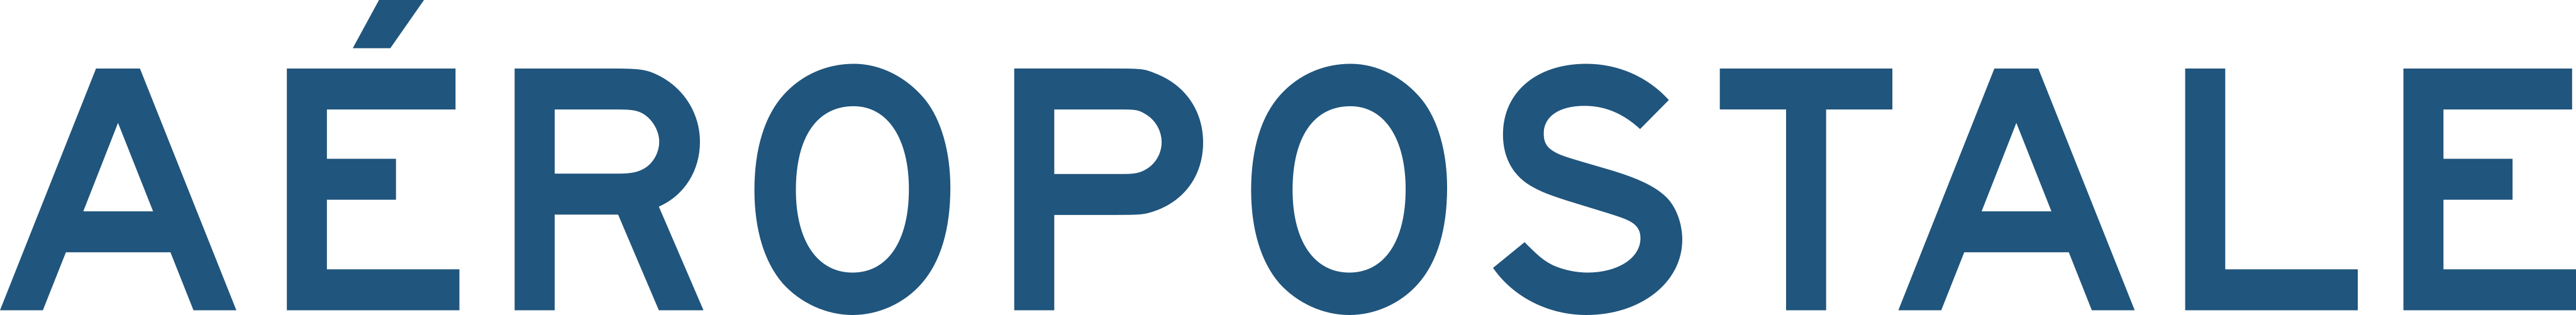 aeropostale logo - Aeropostale Logo